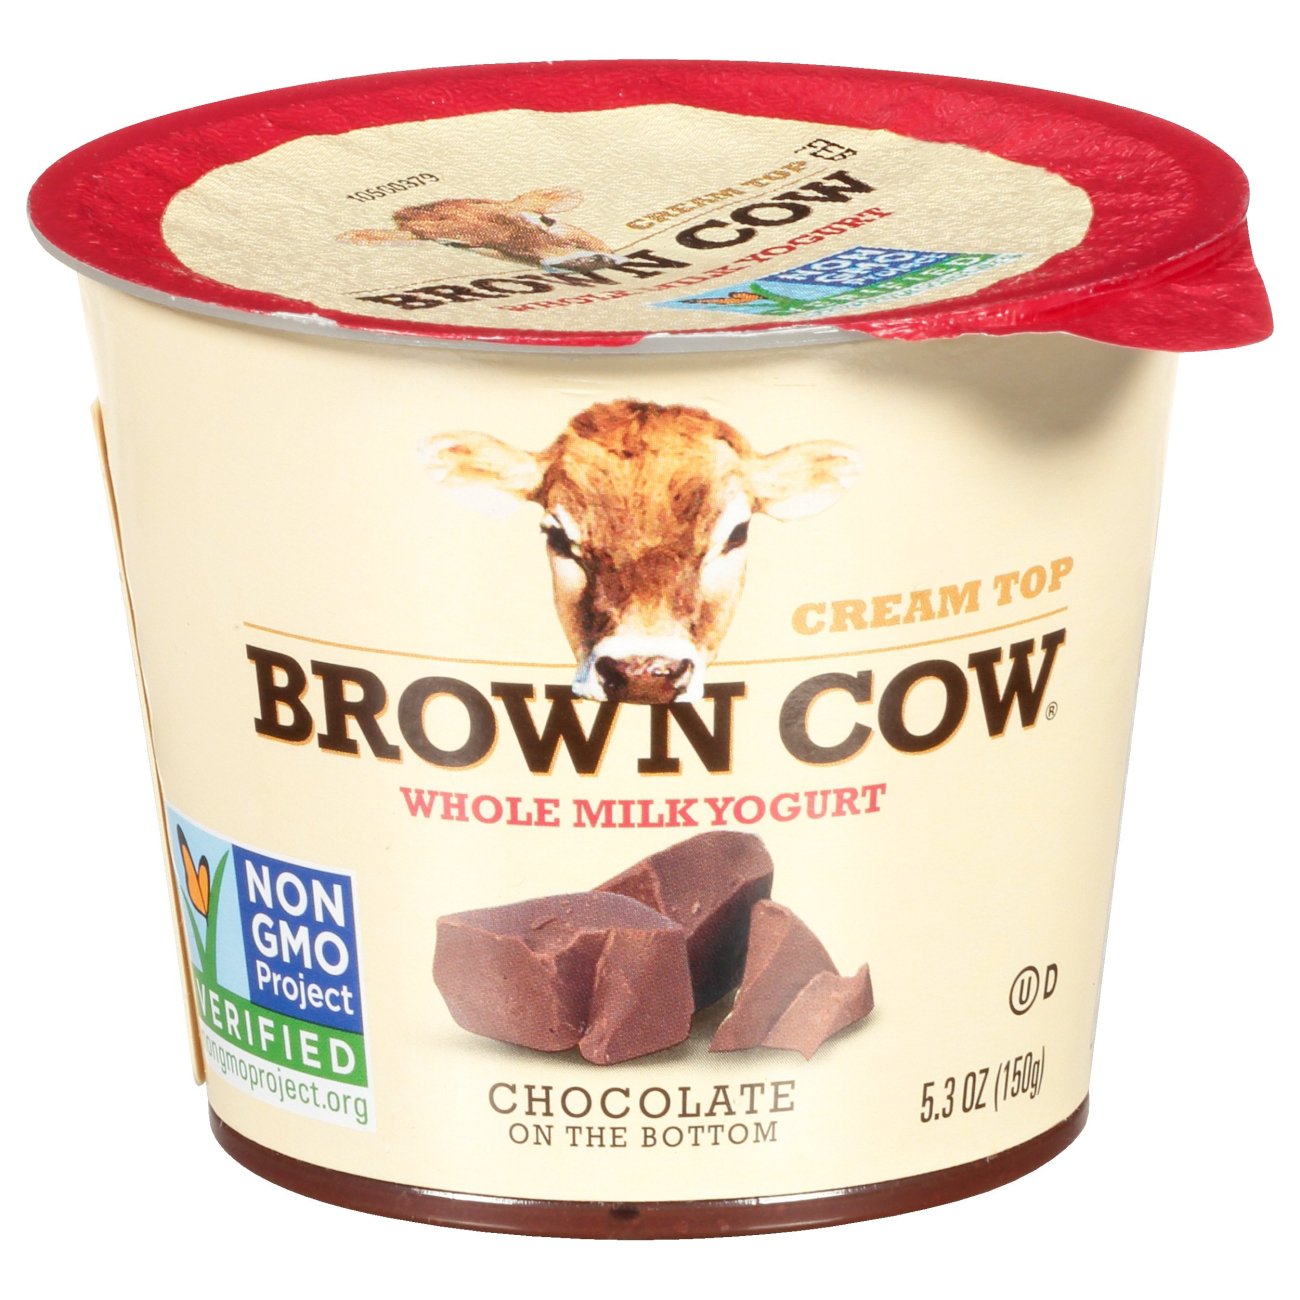 Cow Cream Top Chocolate on the Bottom Whole Milk Yogurt Shop at